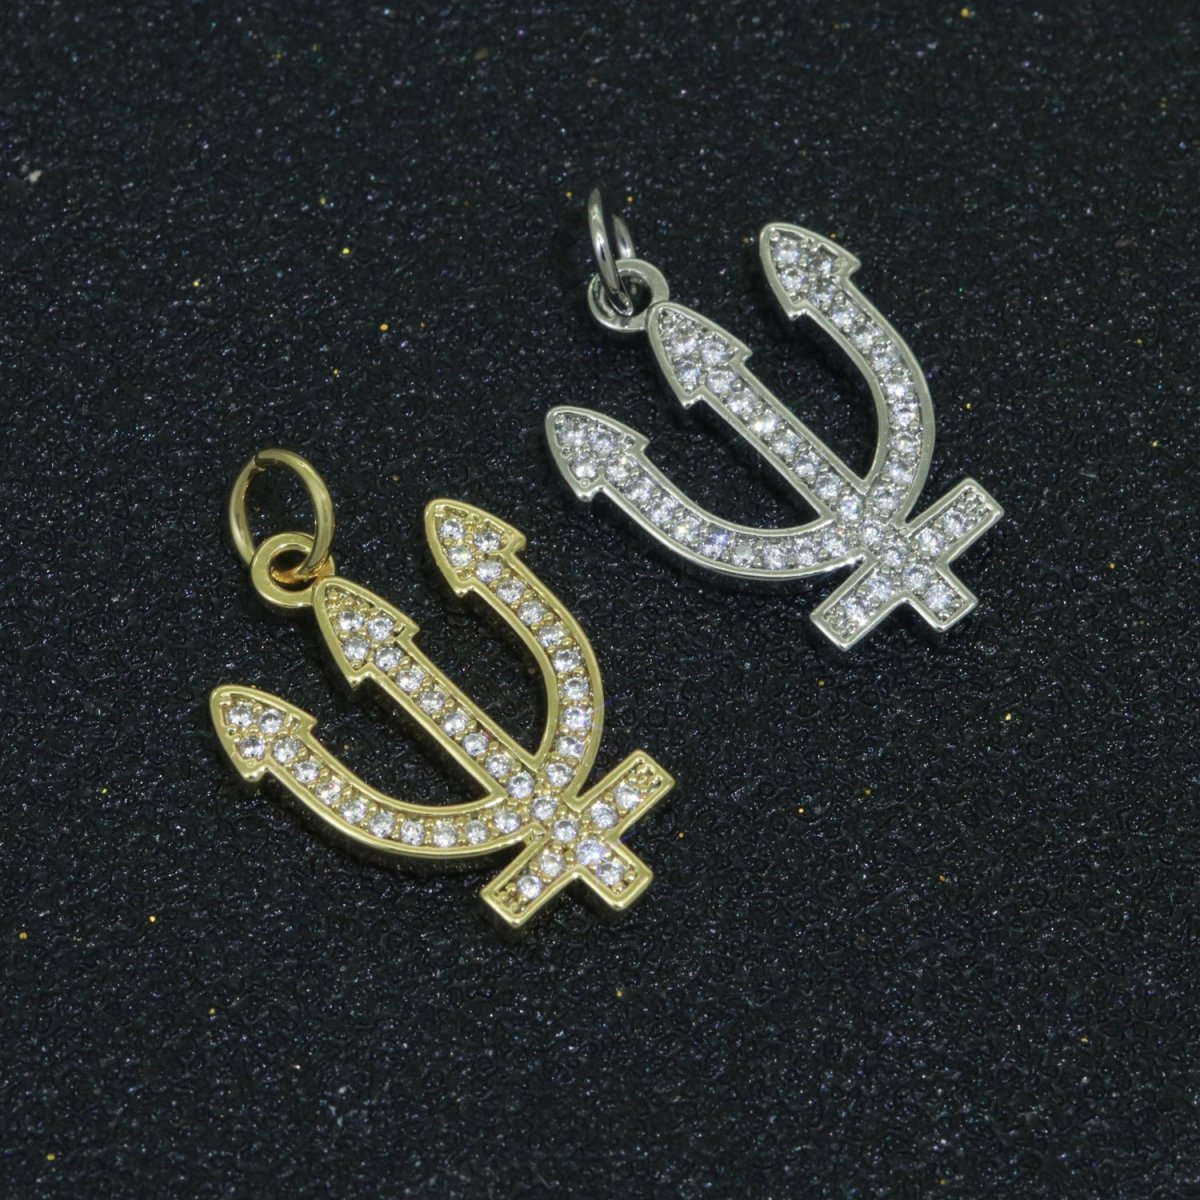 Gold Filled Neptune's Trident Pendants Greek Trident Pendants Large Devil's Pitchfork Charms Beach Pendants Jewelry Supplies M-524 M-525 - DLUXCA